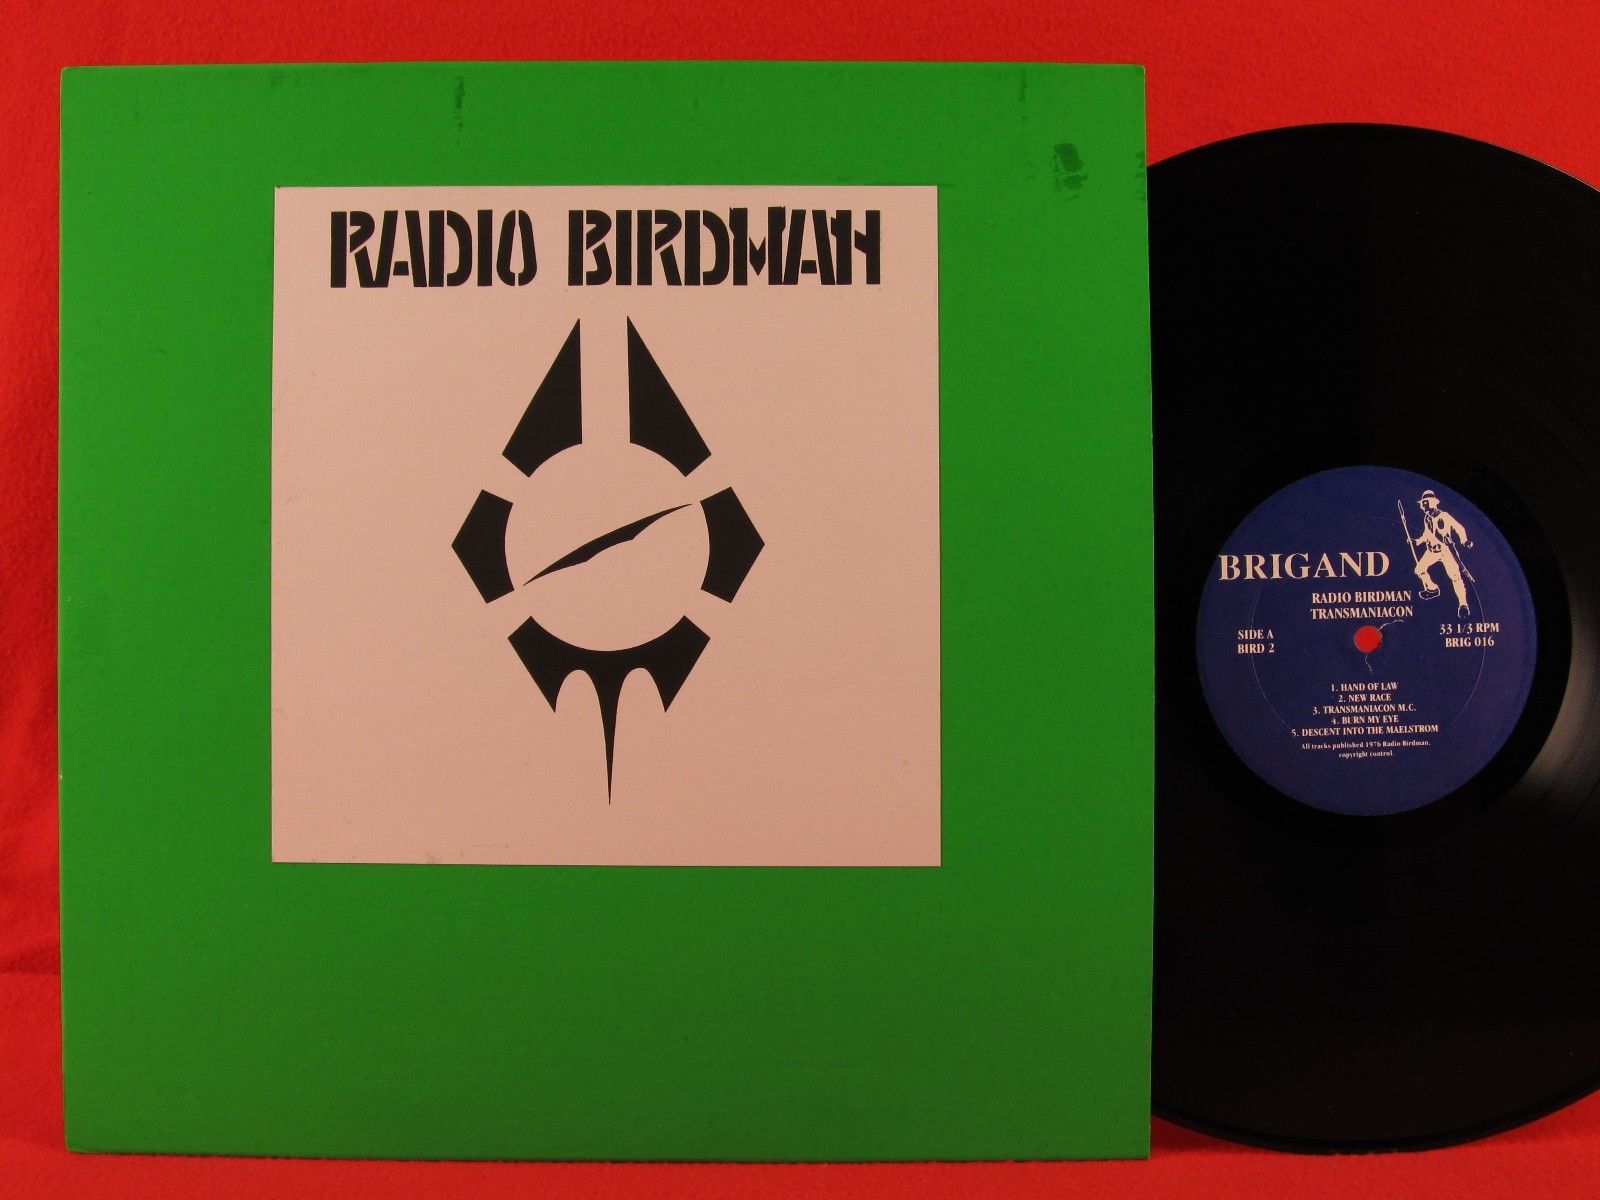 popsike.com - RADIO BIRDMAN Transmaniacon LP LIVE 1976 GARAGE PUNK METAL  Blue Oyster Cult TMOQ - auction details